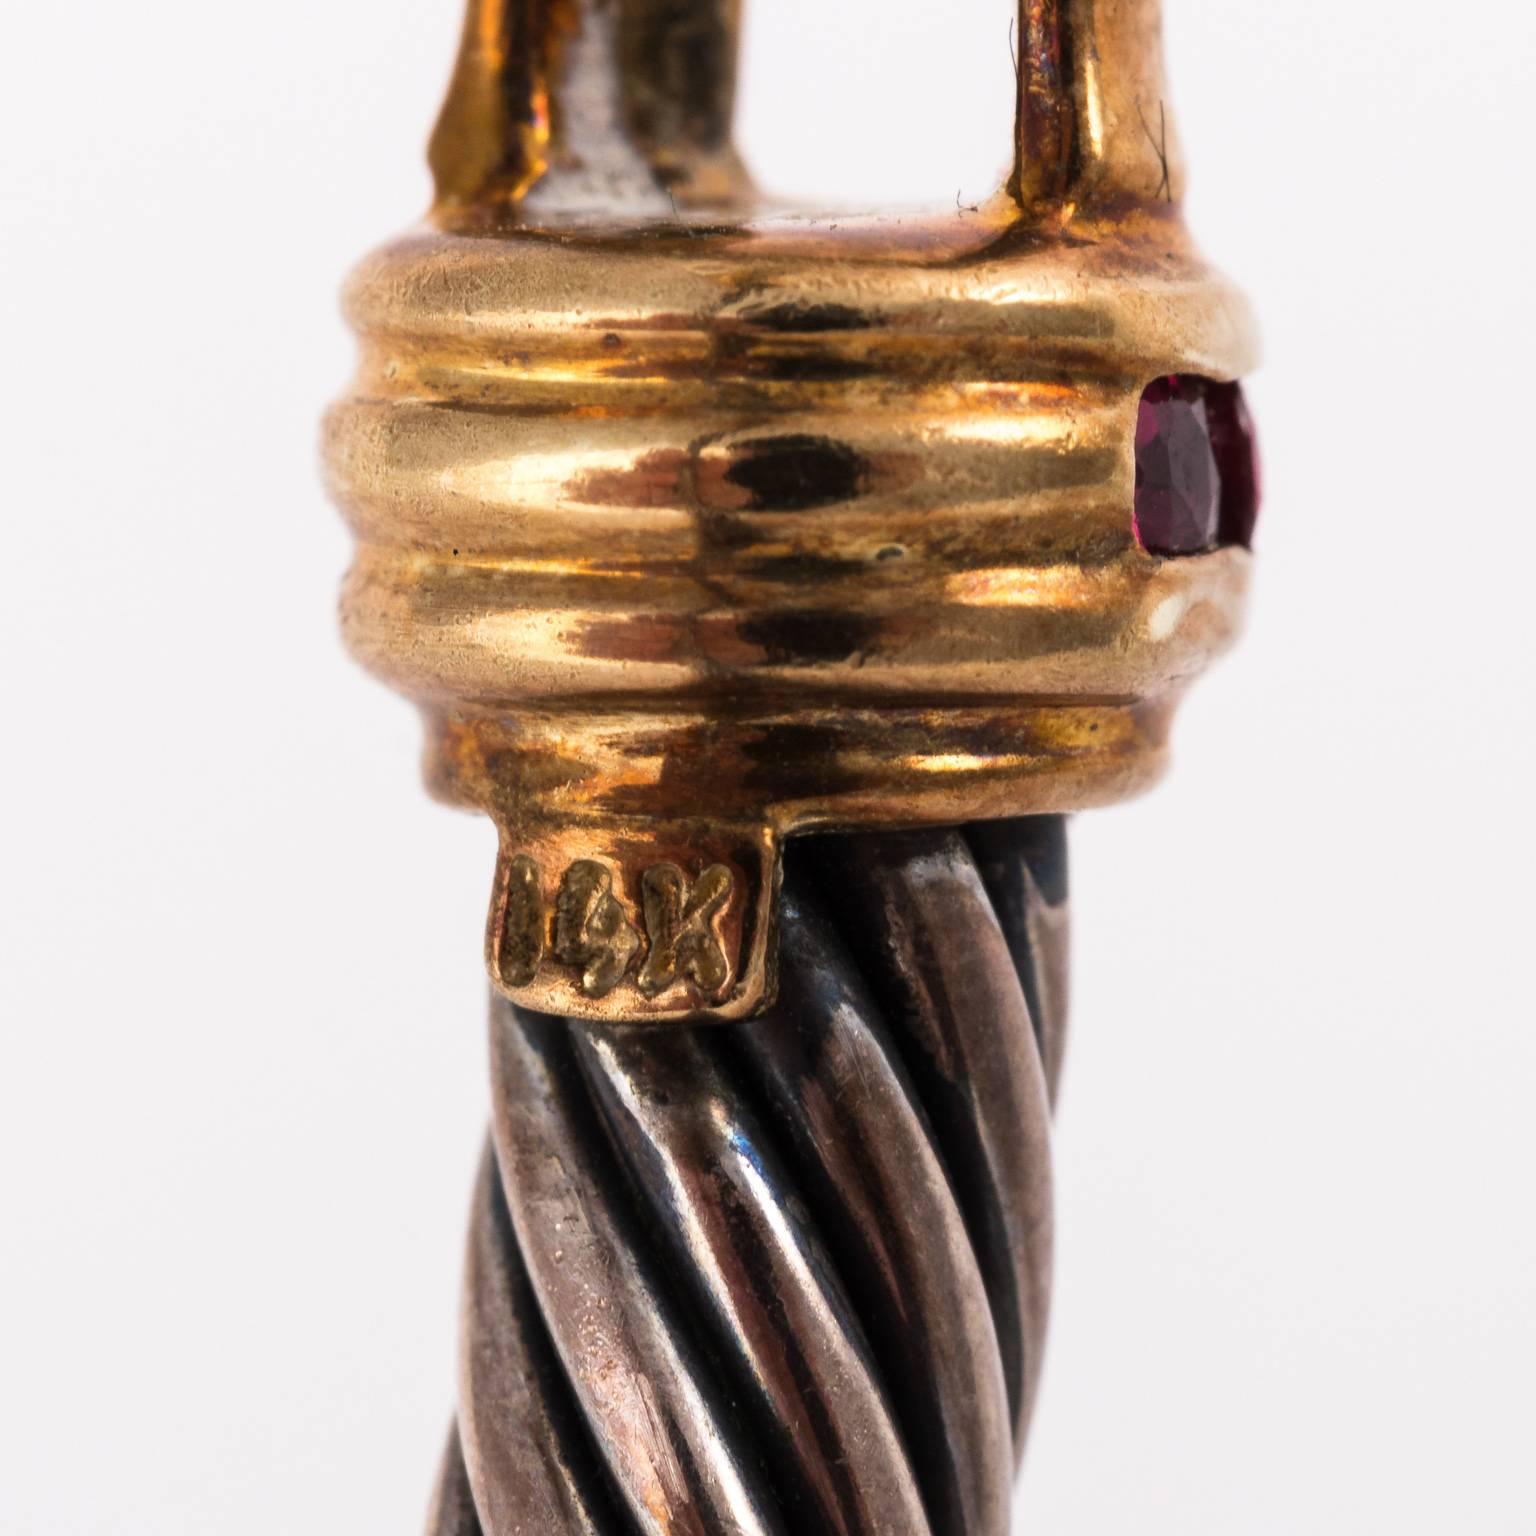 Contemporary David Yurman Cable Bracelet